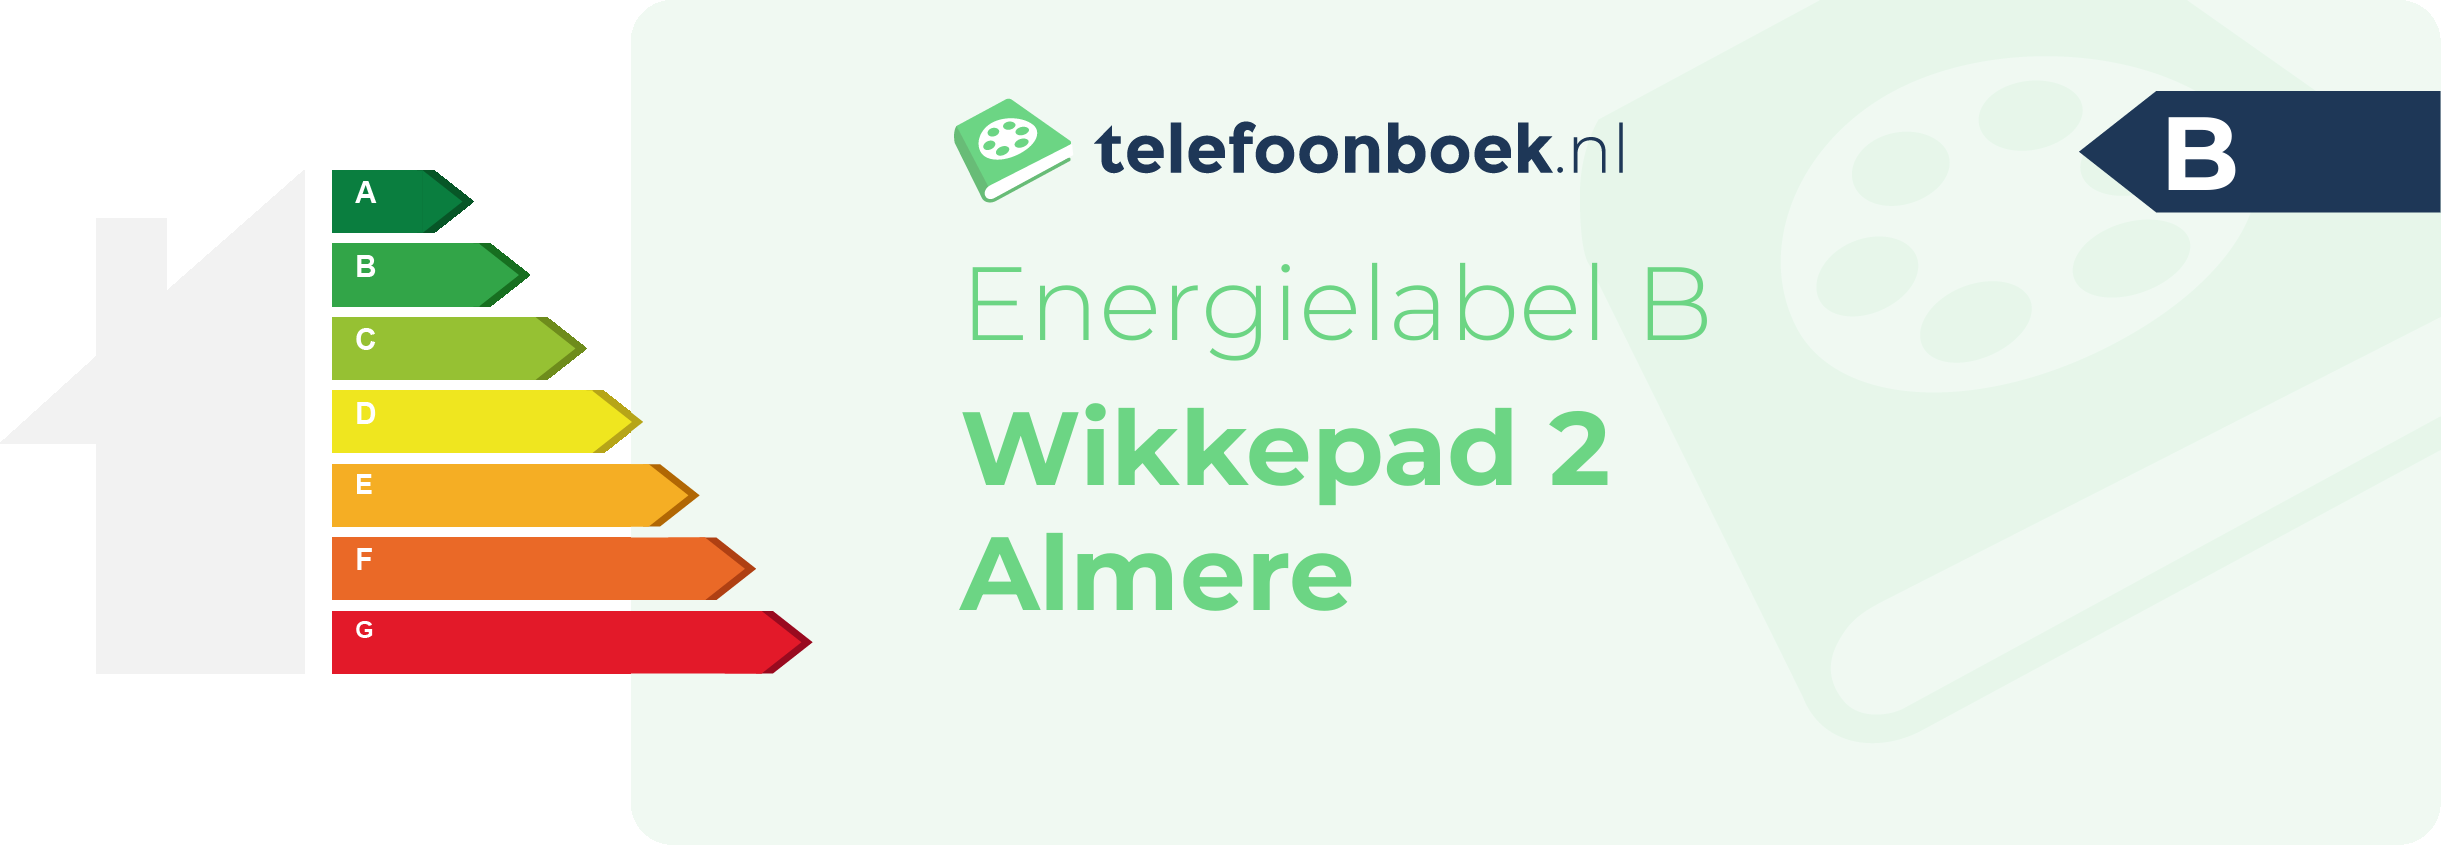 Energielabel Wikkepad 2 Almere